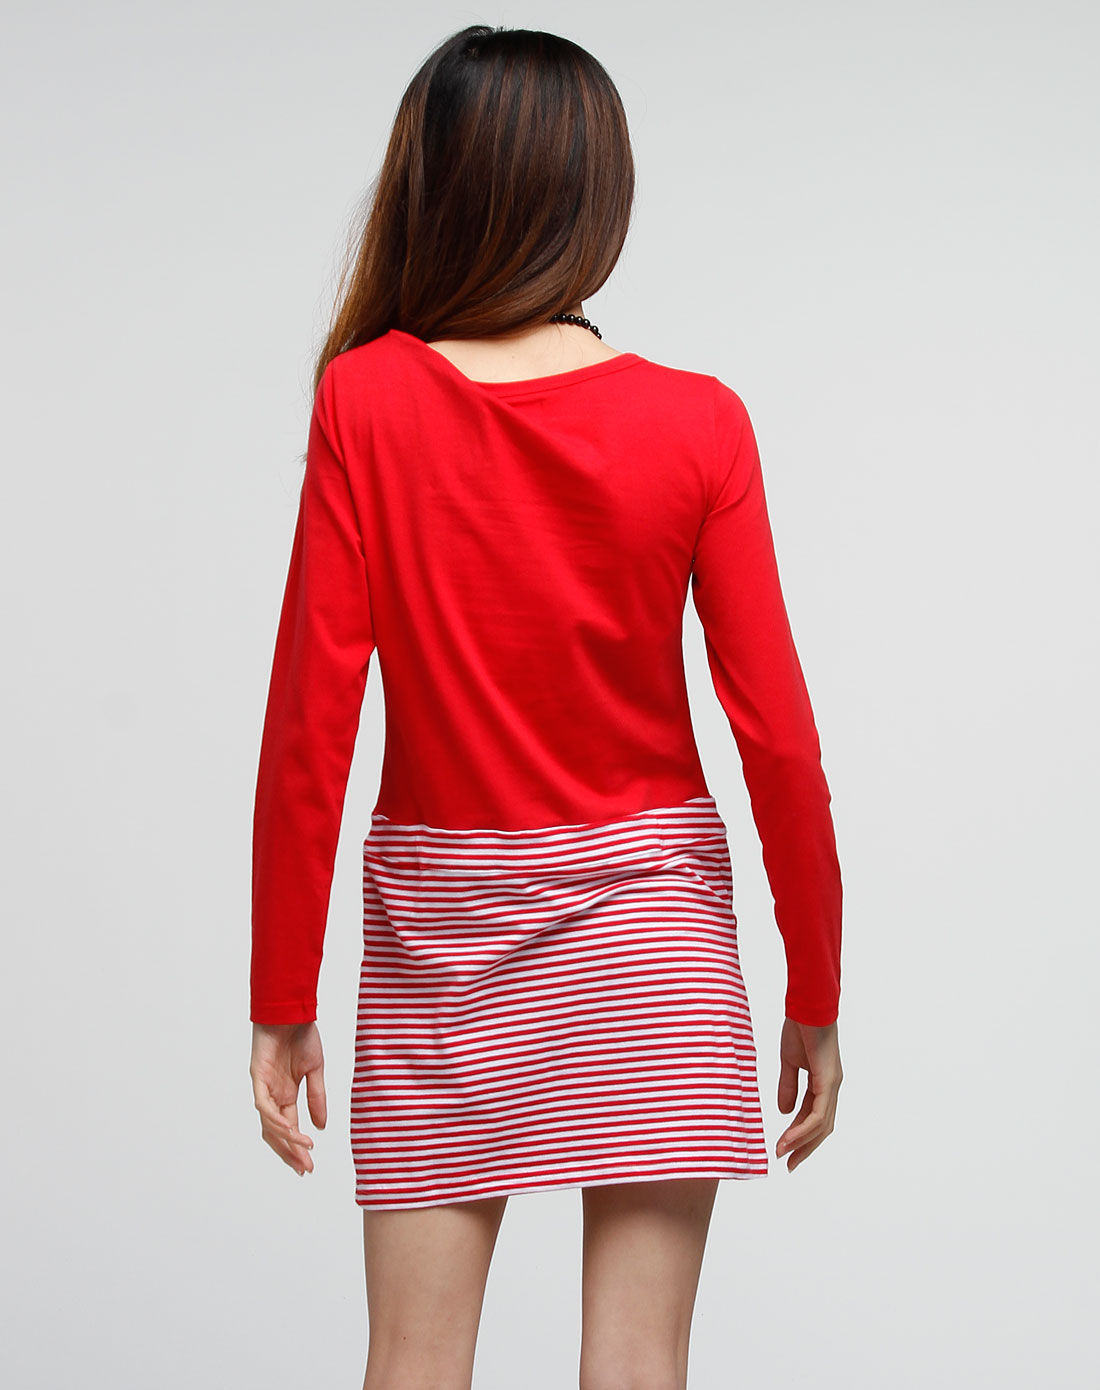 rocawear女装红/白色印字条纹时尚长袖长款上衣104206015r12037